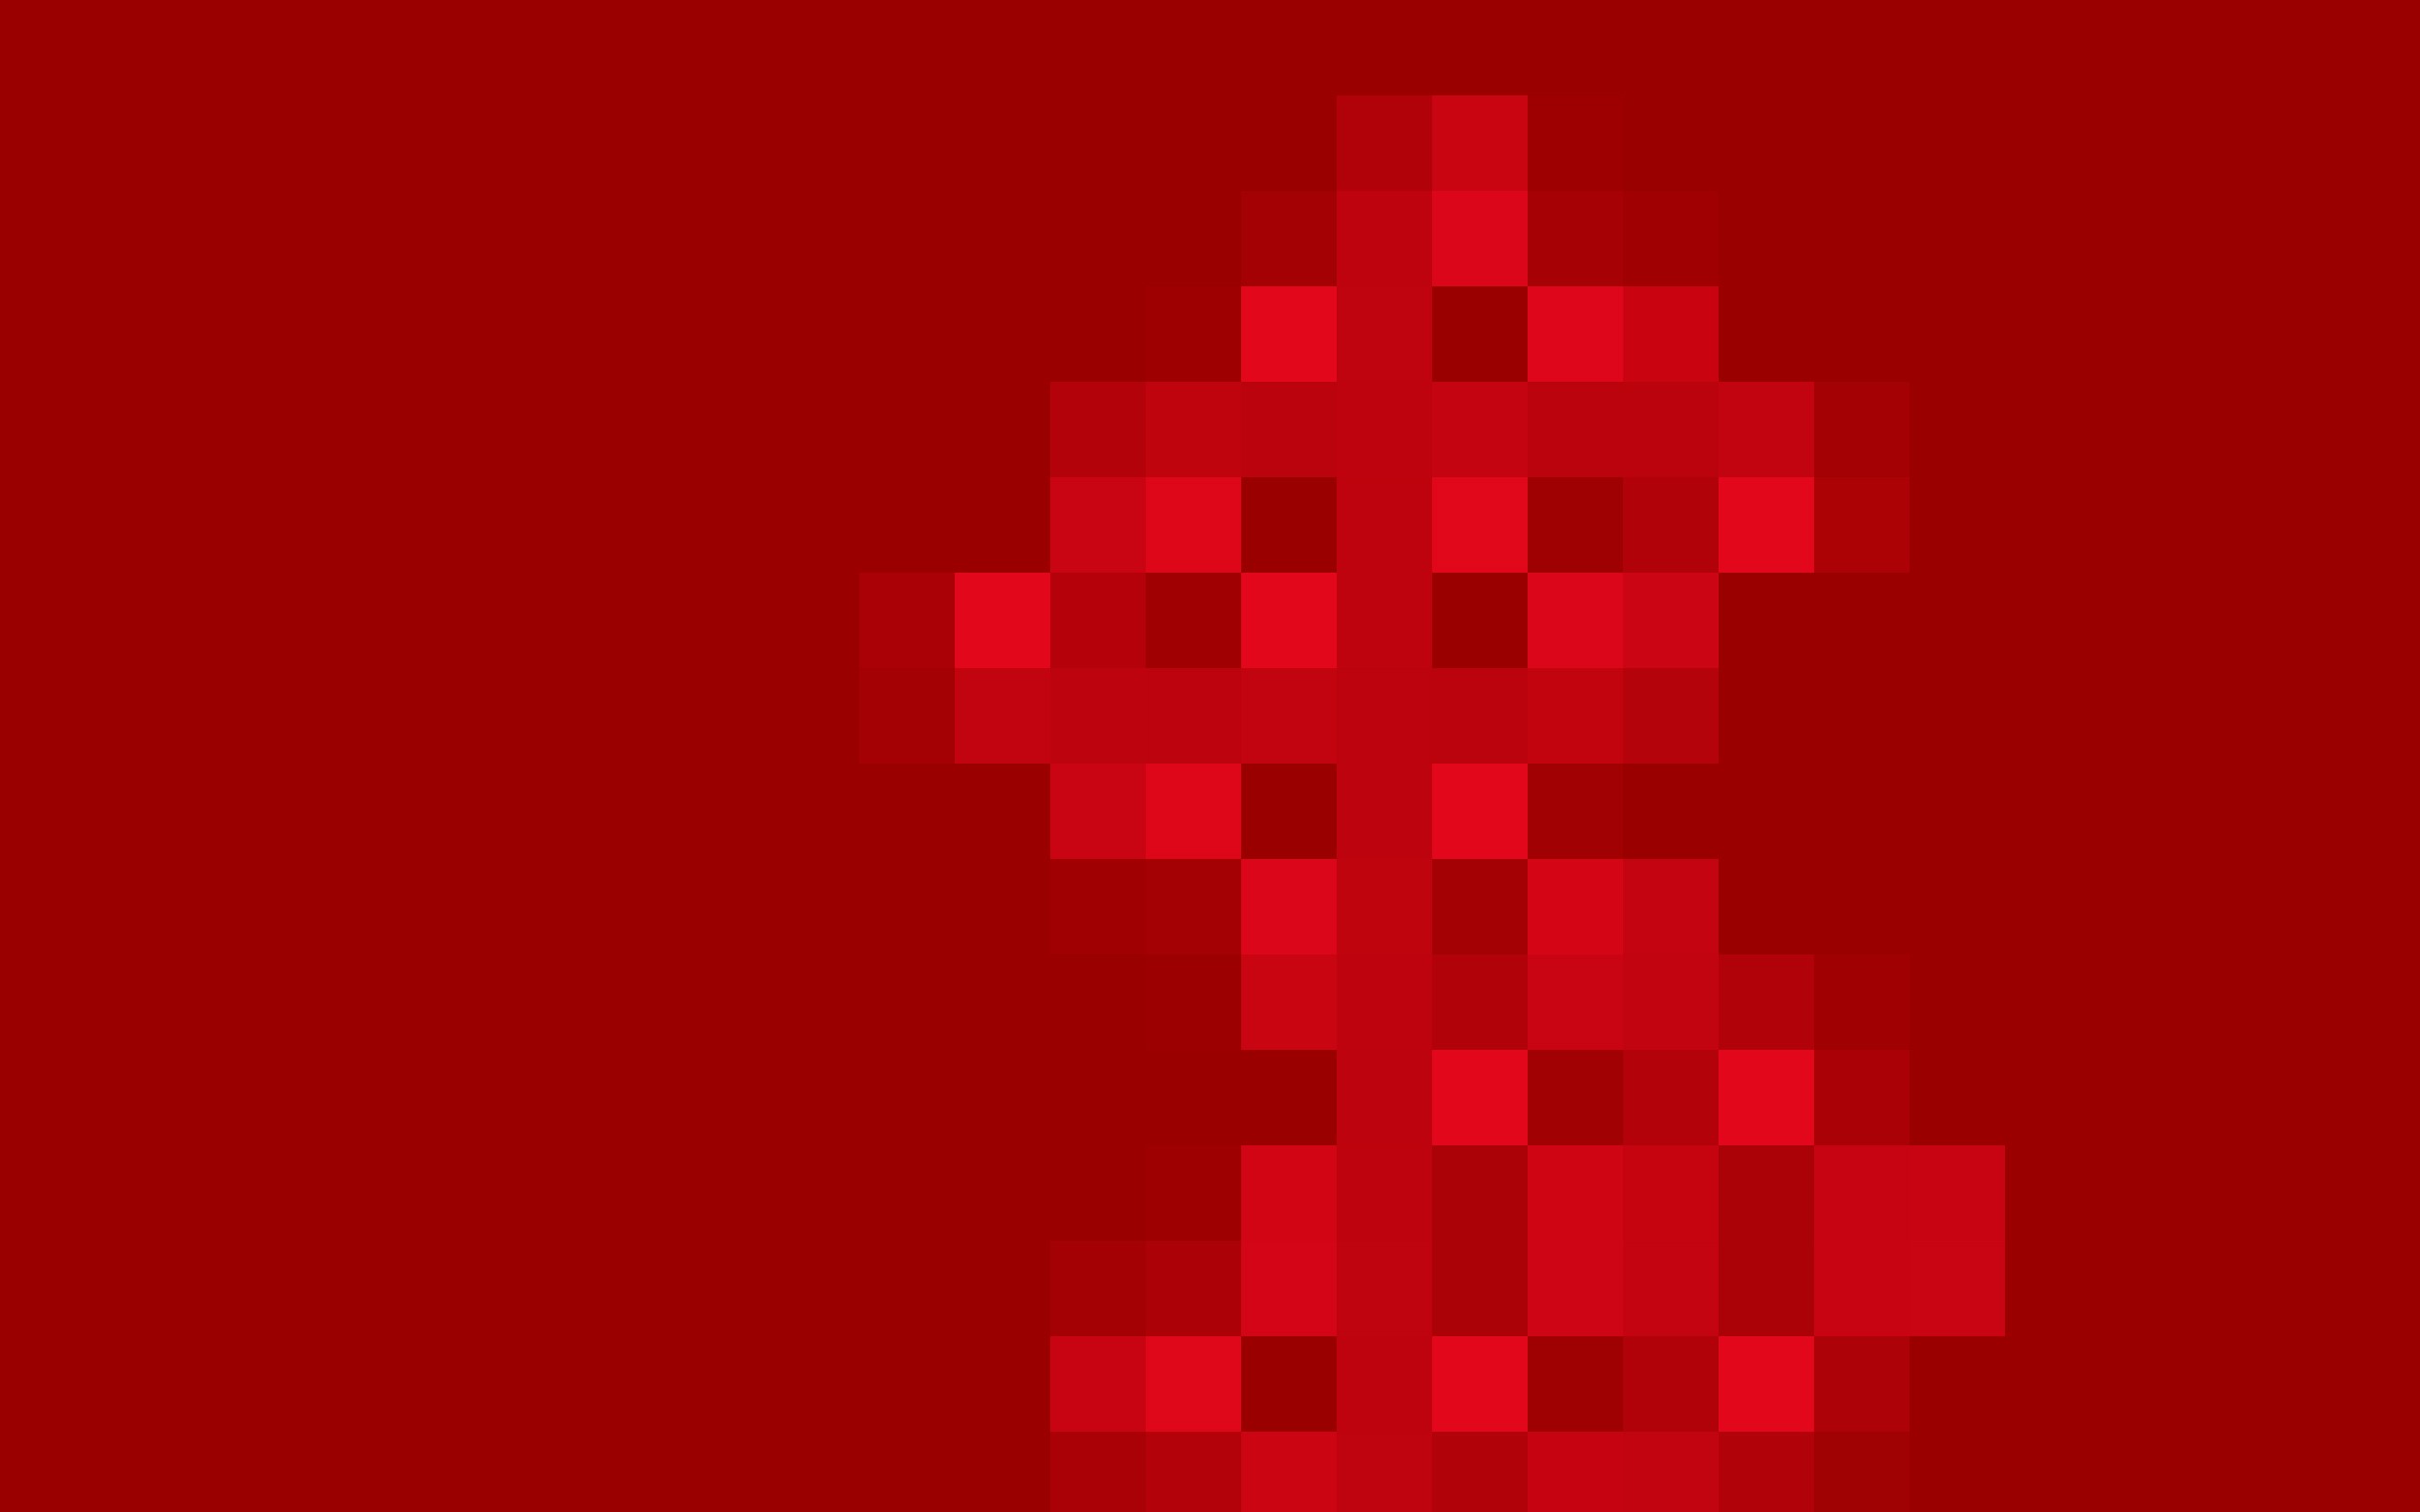 General 2560x1600 minimalism digital art red background red pixel art simple background